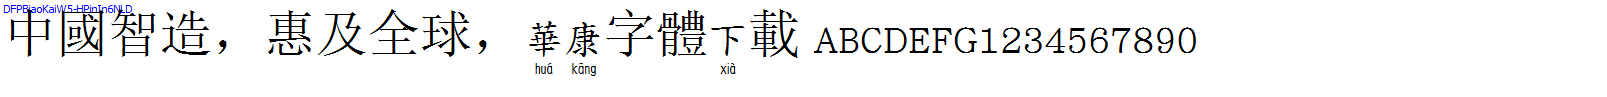 華康字體DFPBiaoKaiW5-HPinIn6NLD.TTF